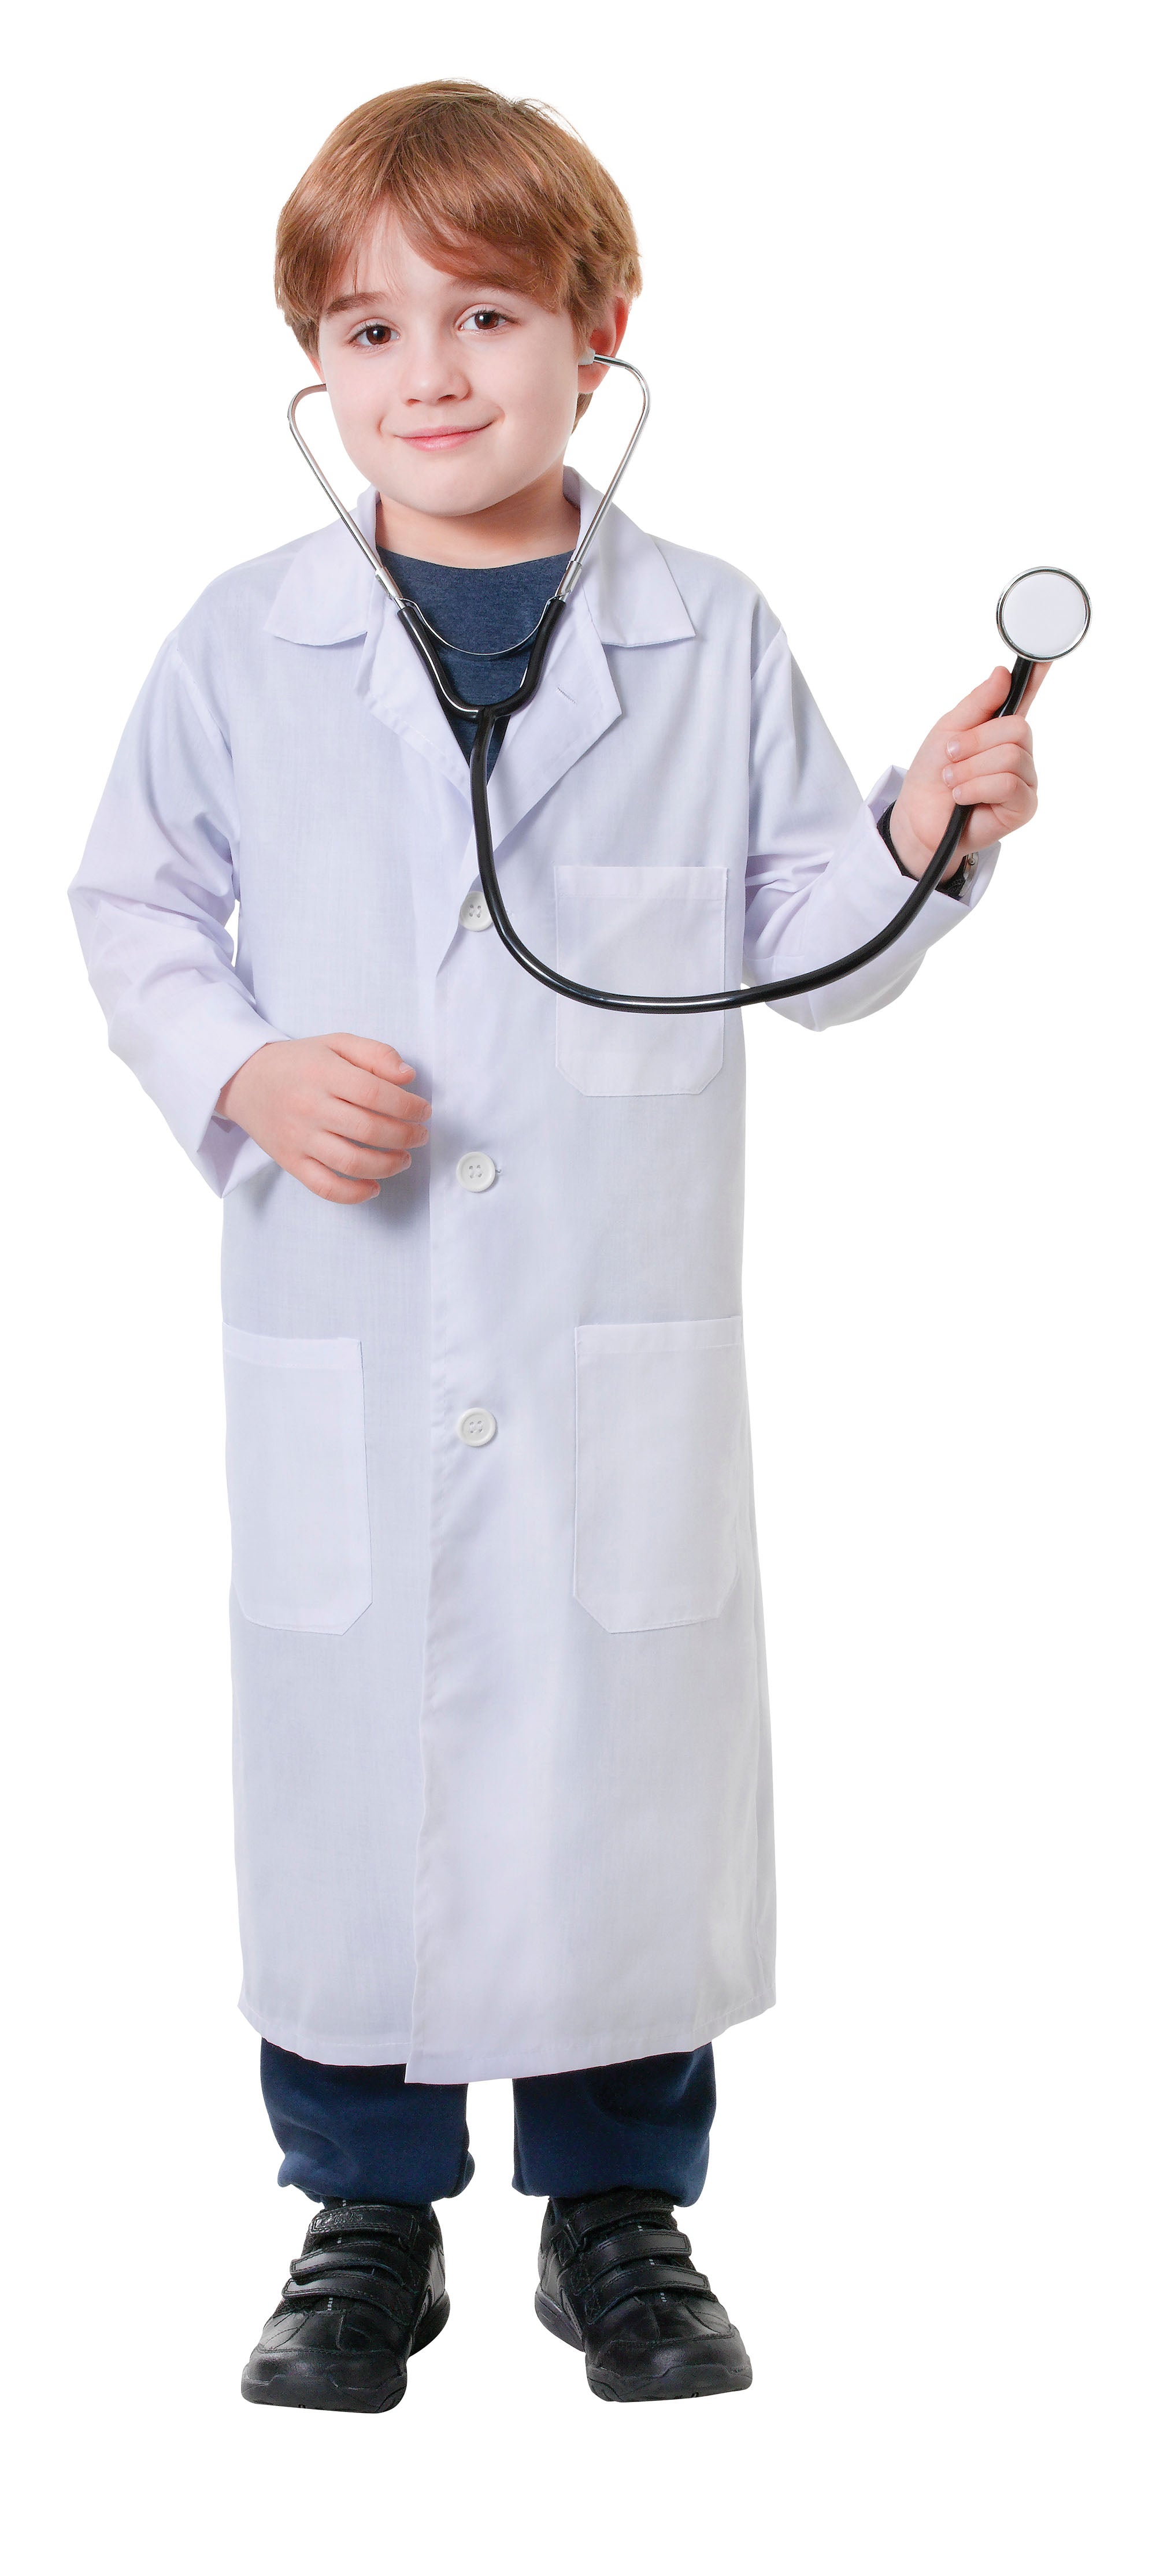 Child's white Doctors Coat Costume for boy or girl.